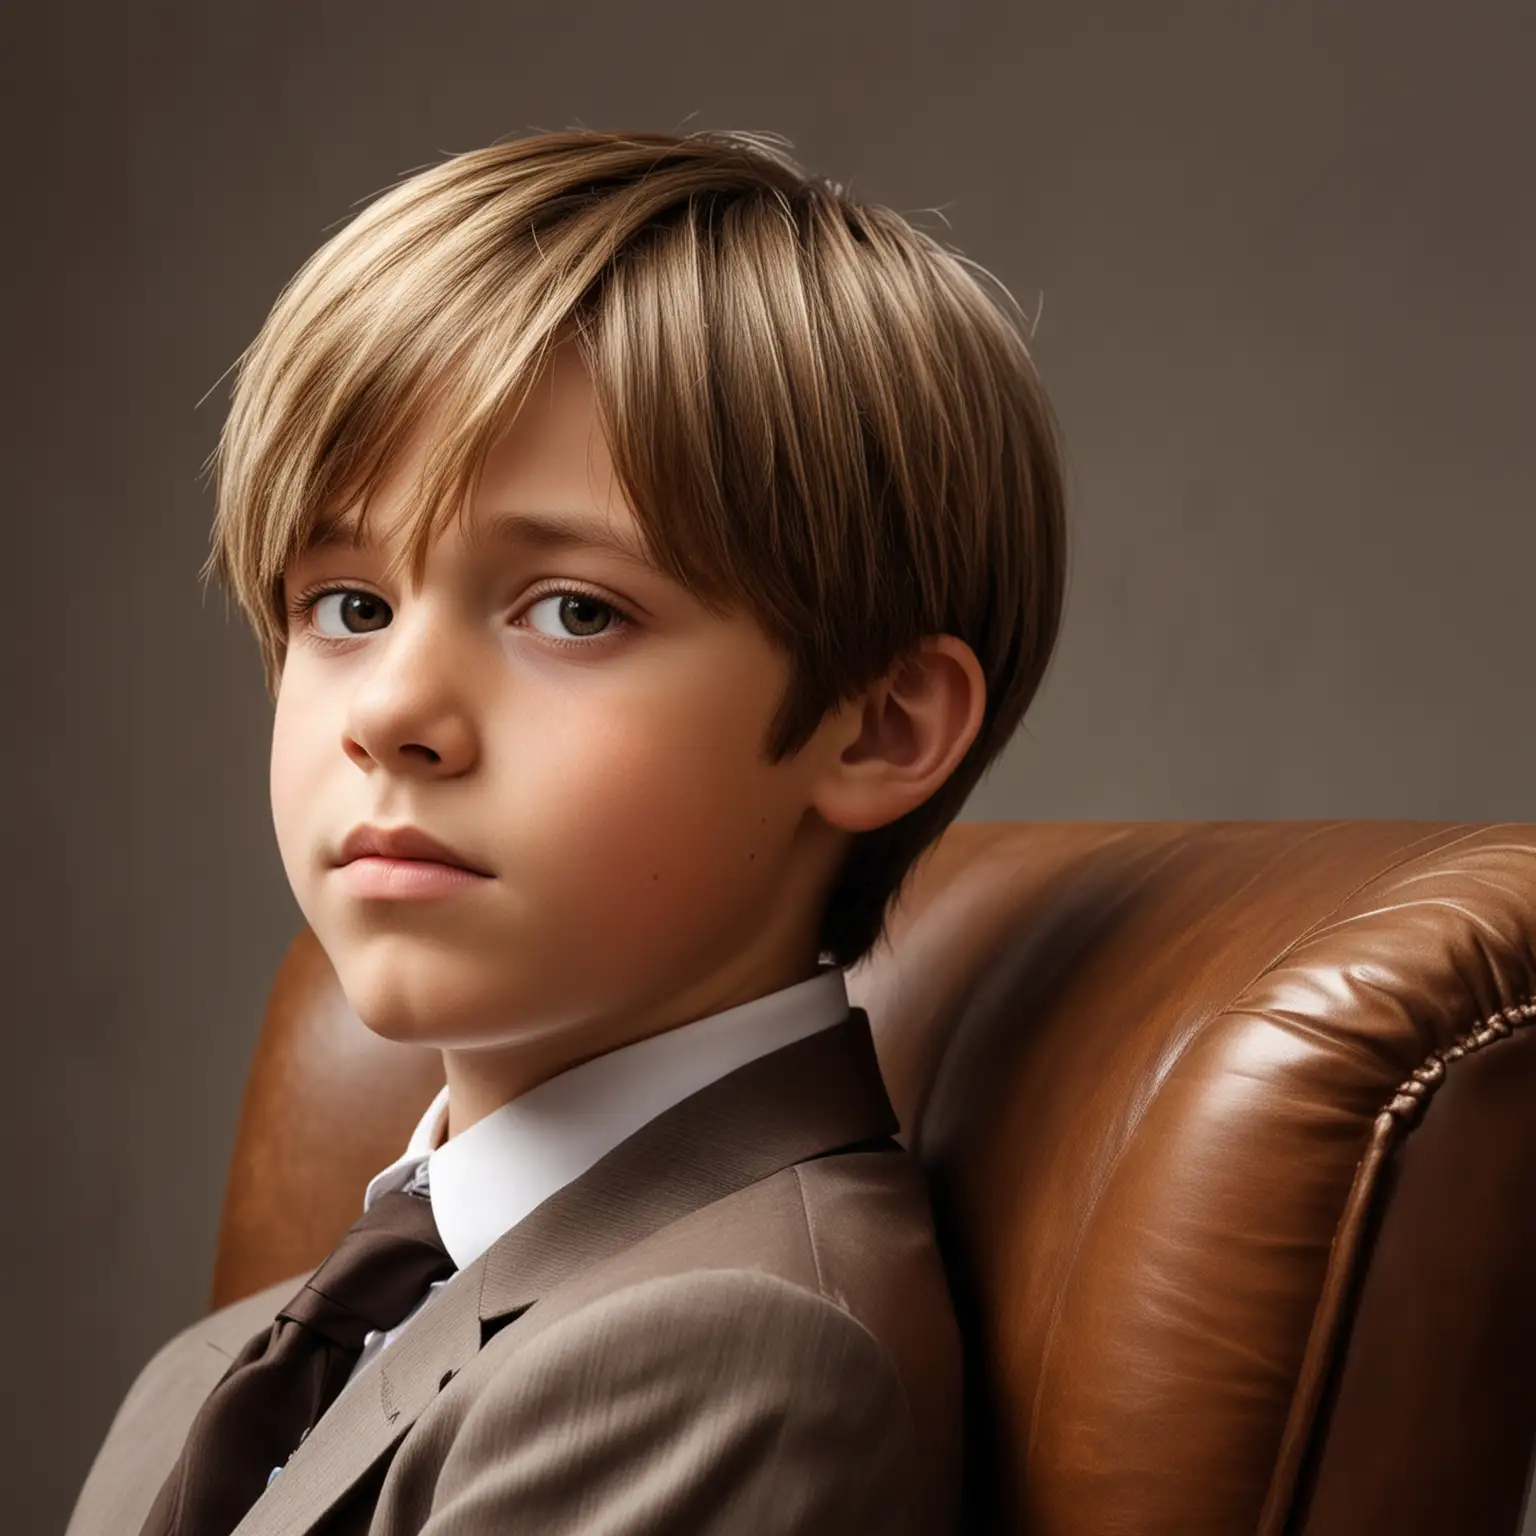 Closeup Portrait of a TwelveYearOld Boy with Smooth Light Brown Hair